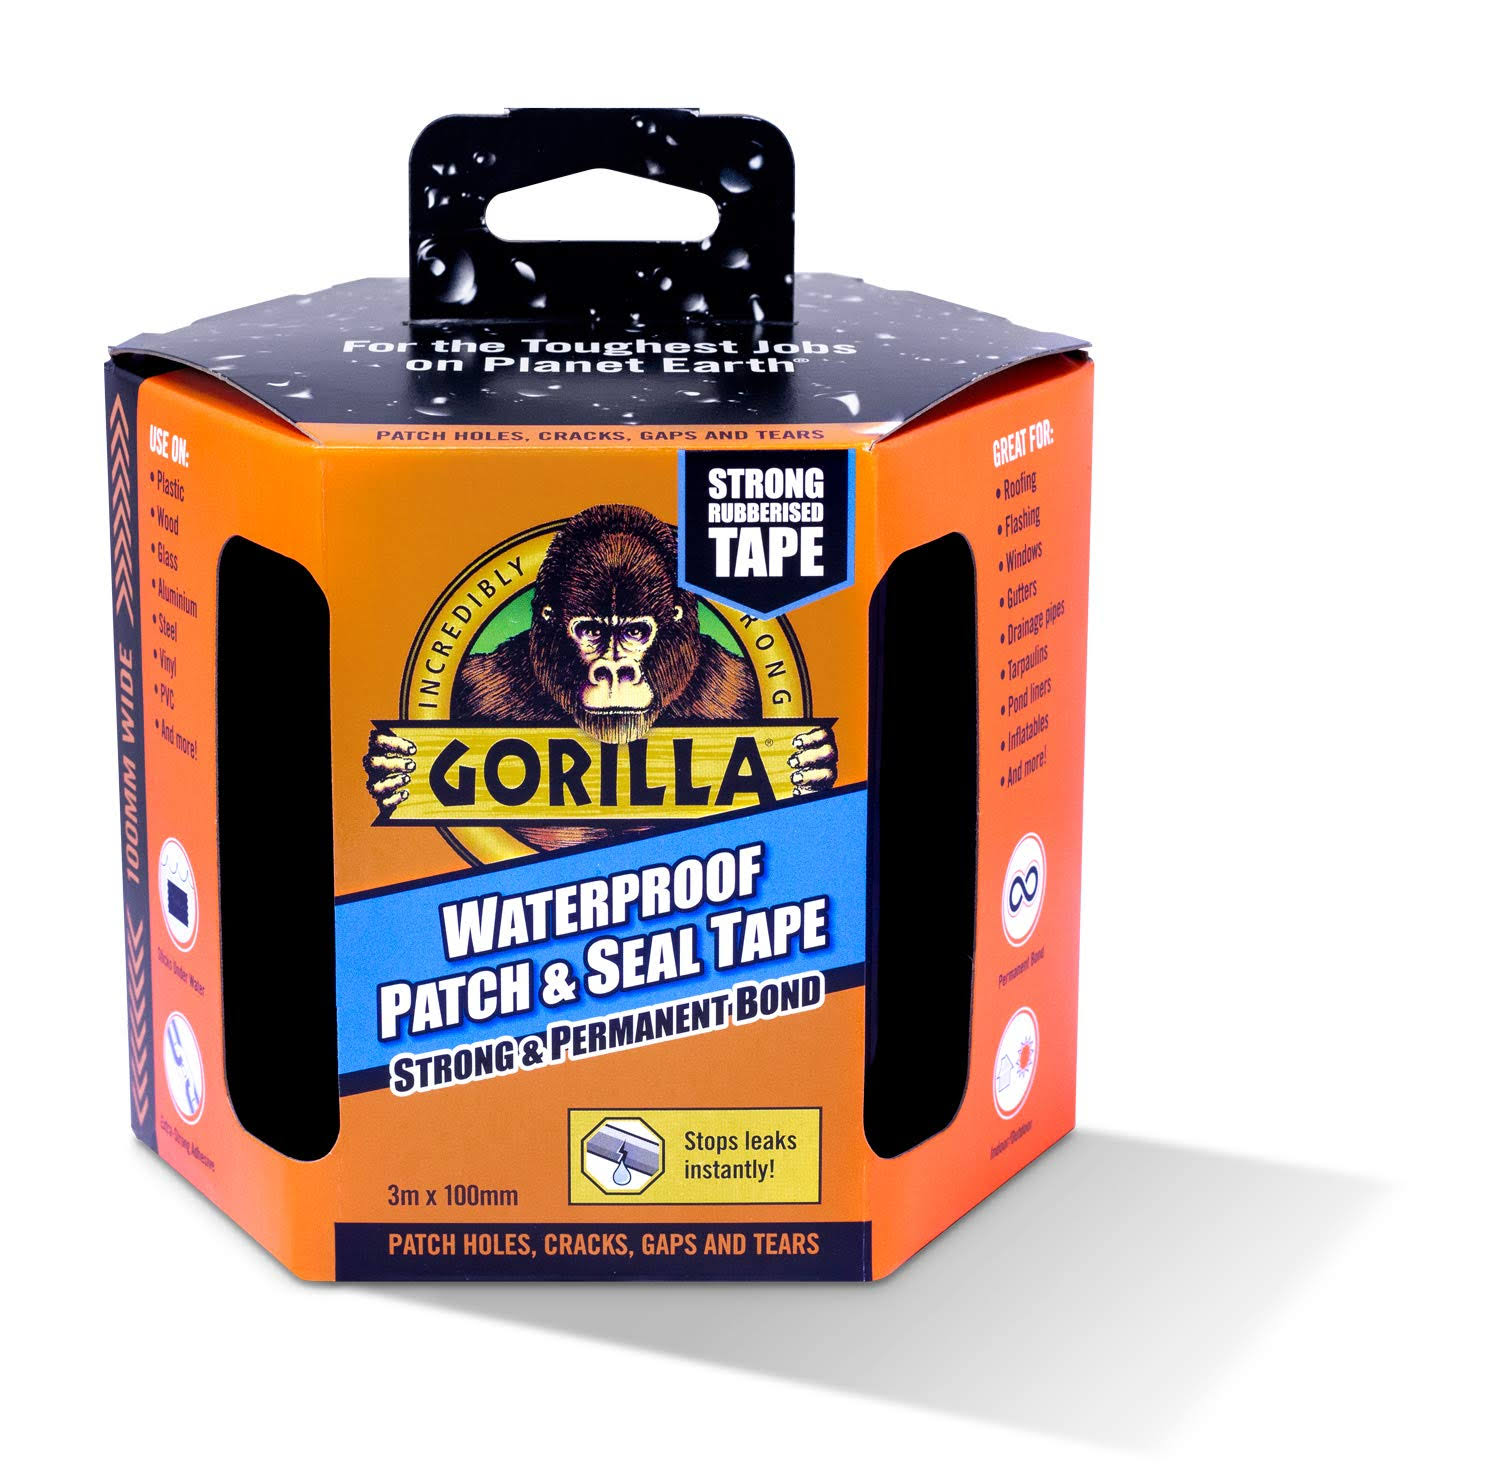 Gorilla Waterproof Patch & Seal Tape Black 3M